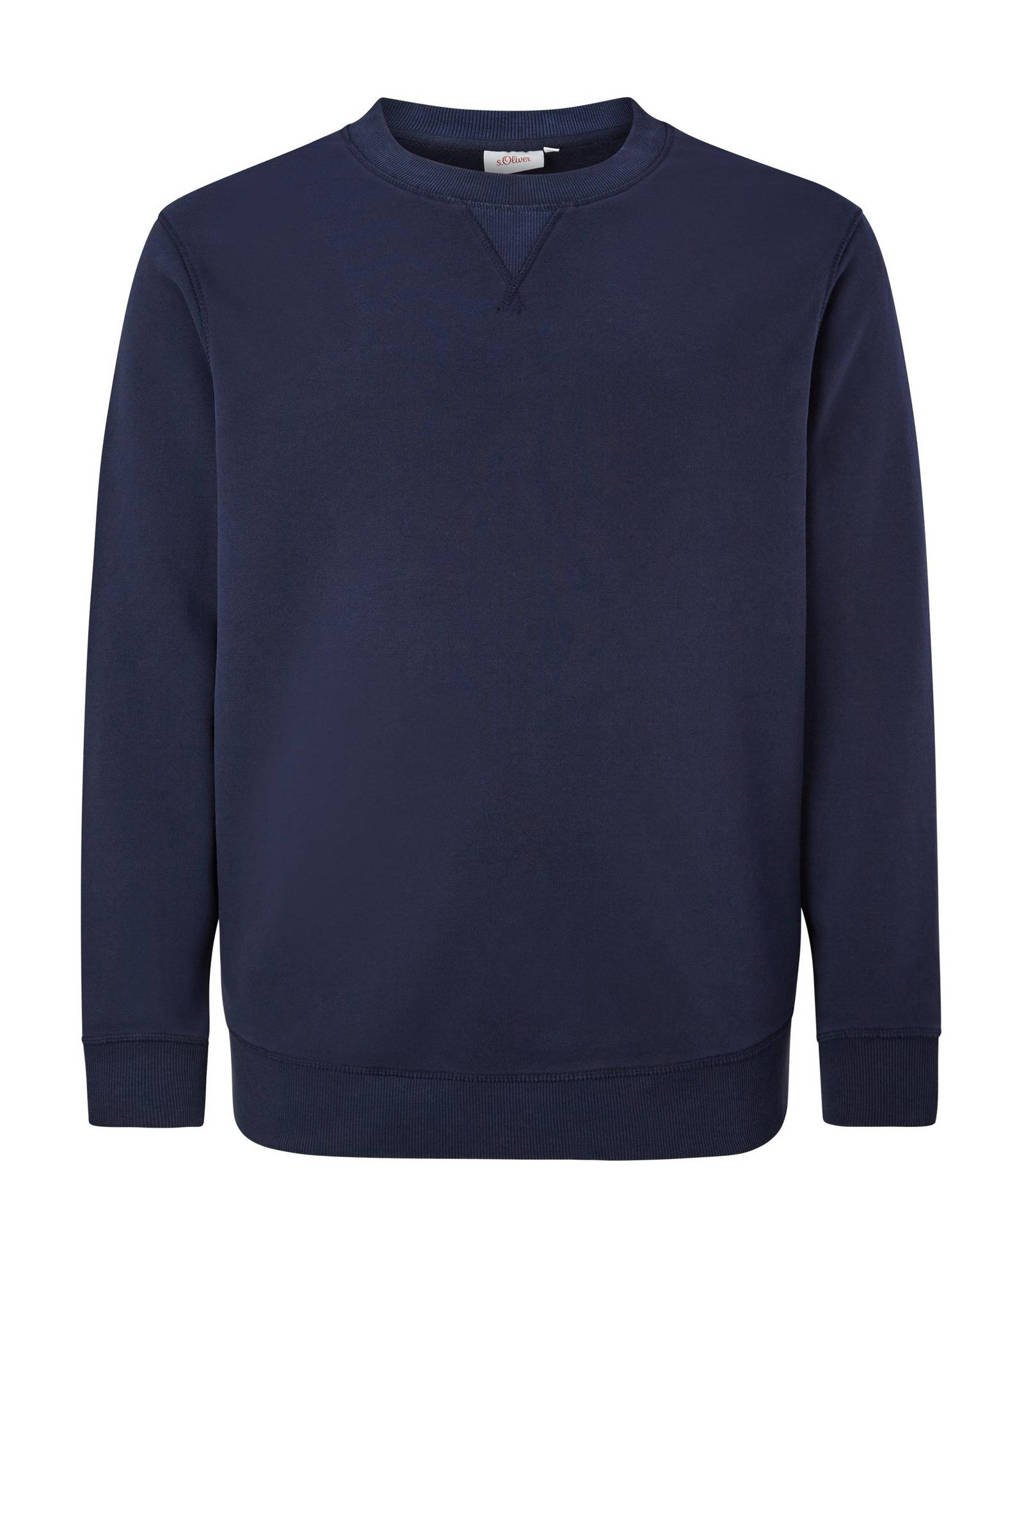 s.Oliver Big Size sweater Plus Size donkerblauw, Donkerblauw